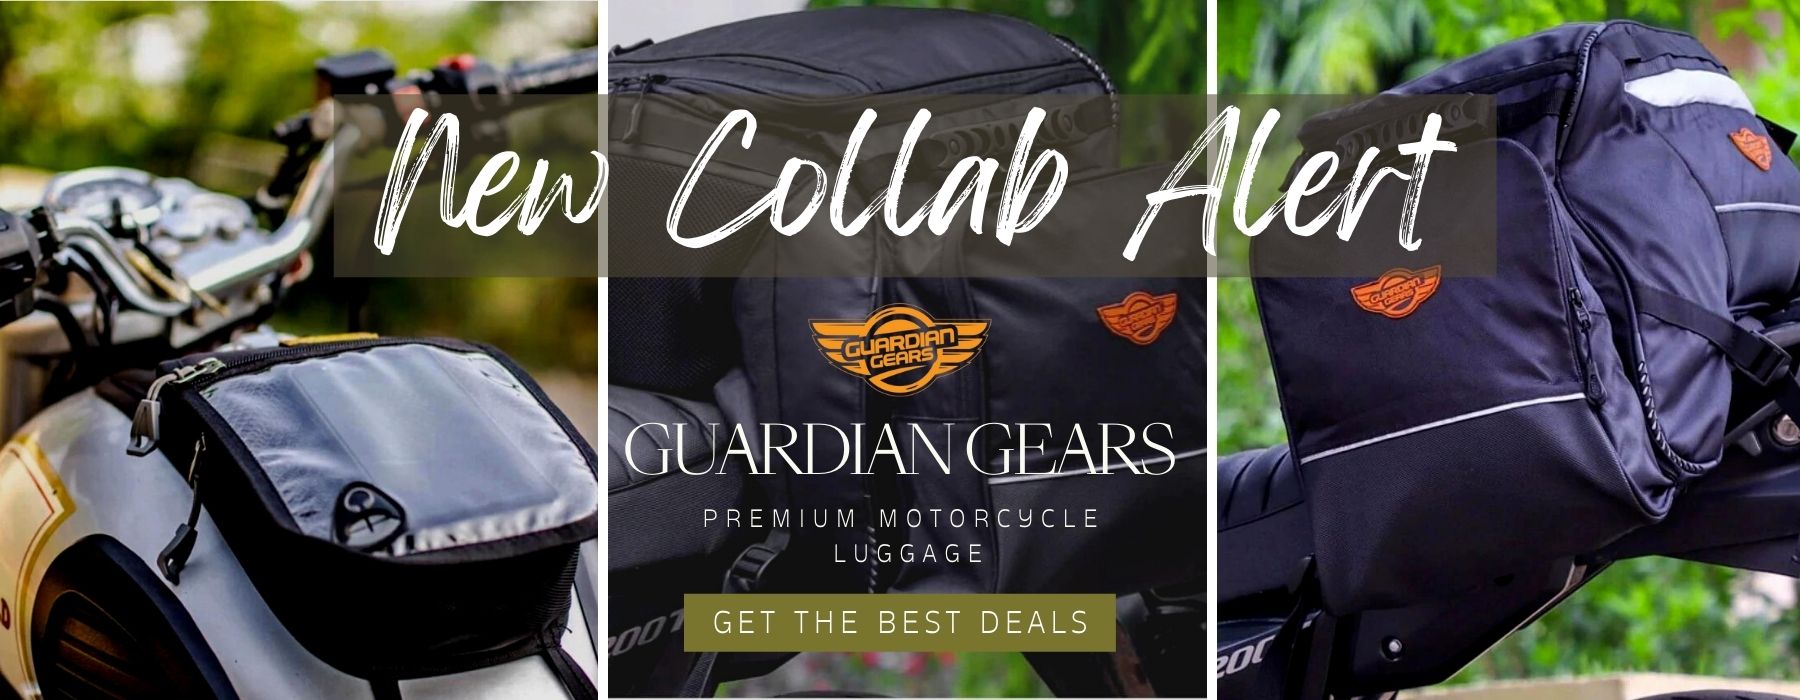 Guardian Gears - Motorcycle Luggage | OutdoorTravelGear.com